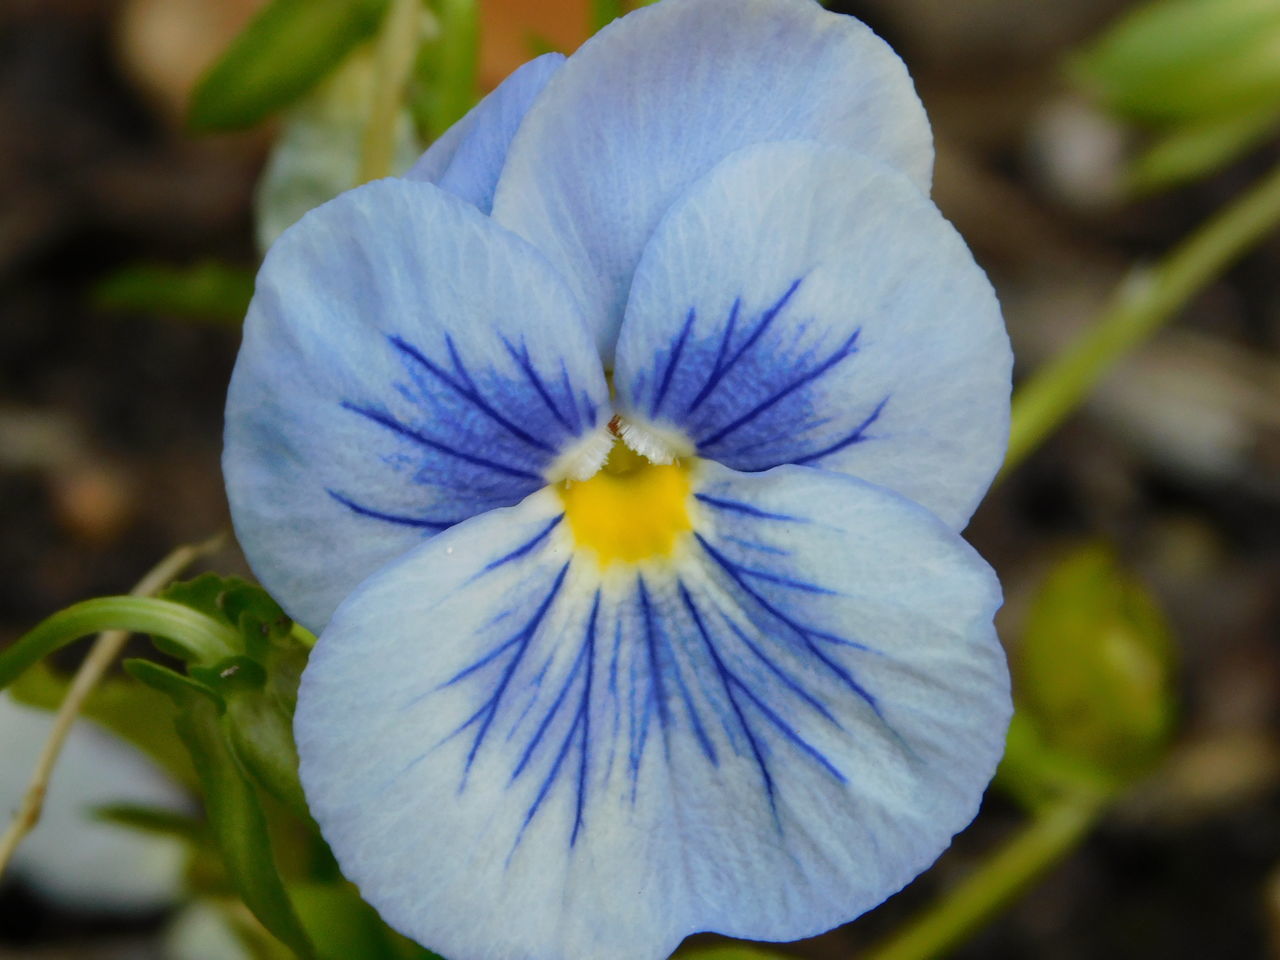 CLOSE-UP OF BLUE FLOWER